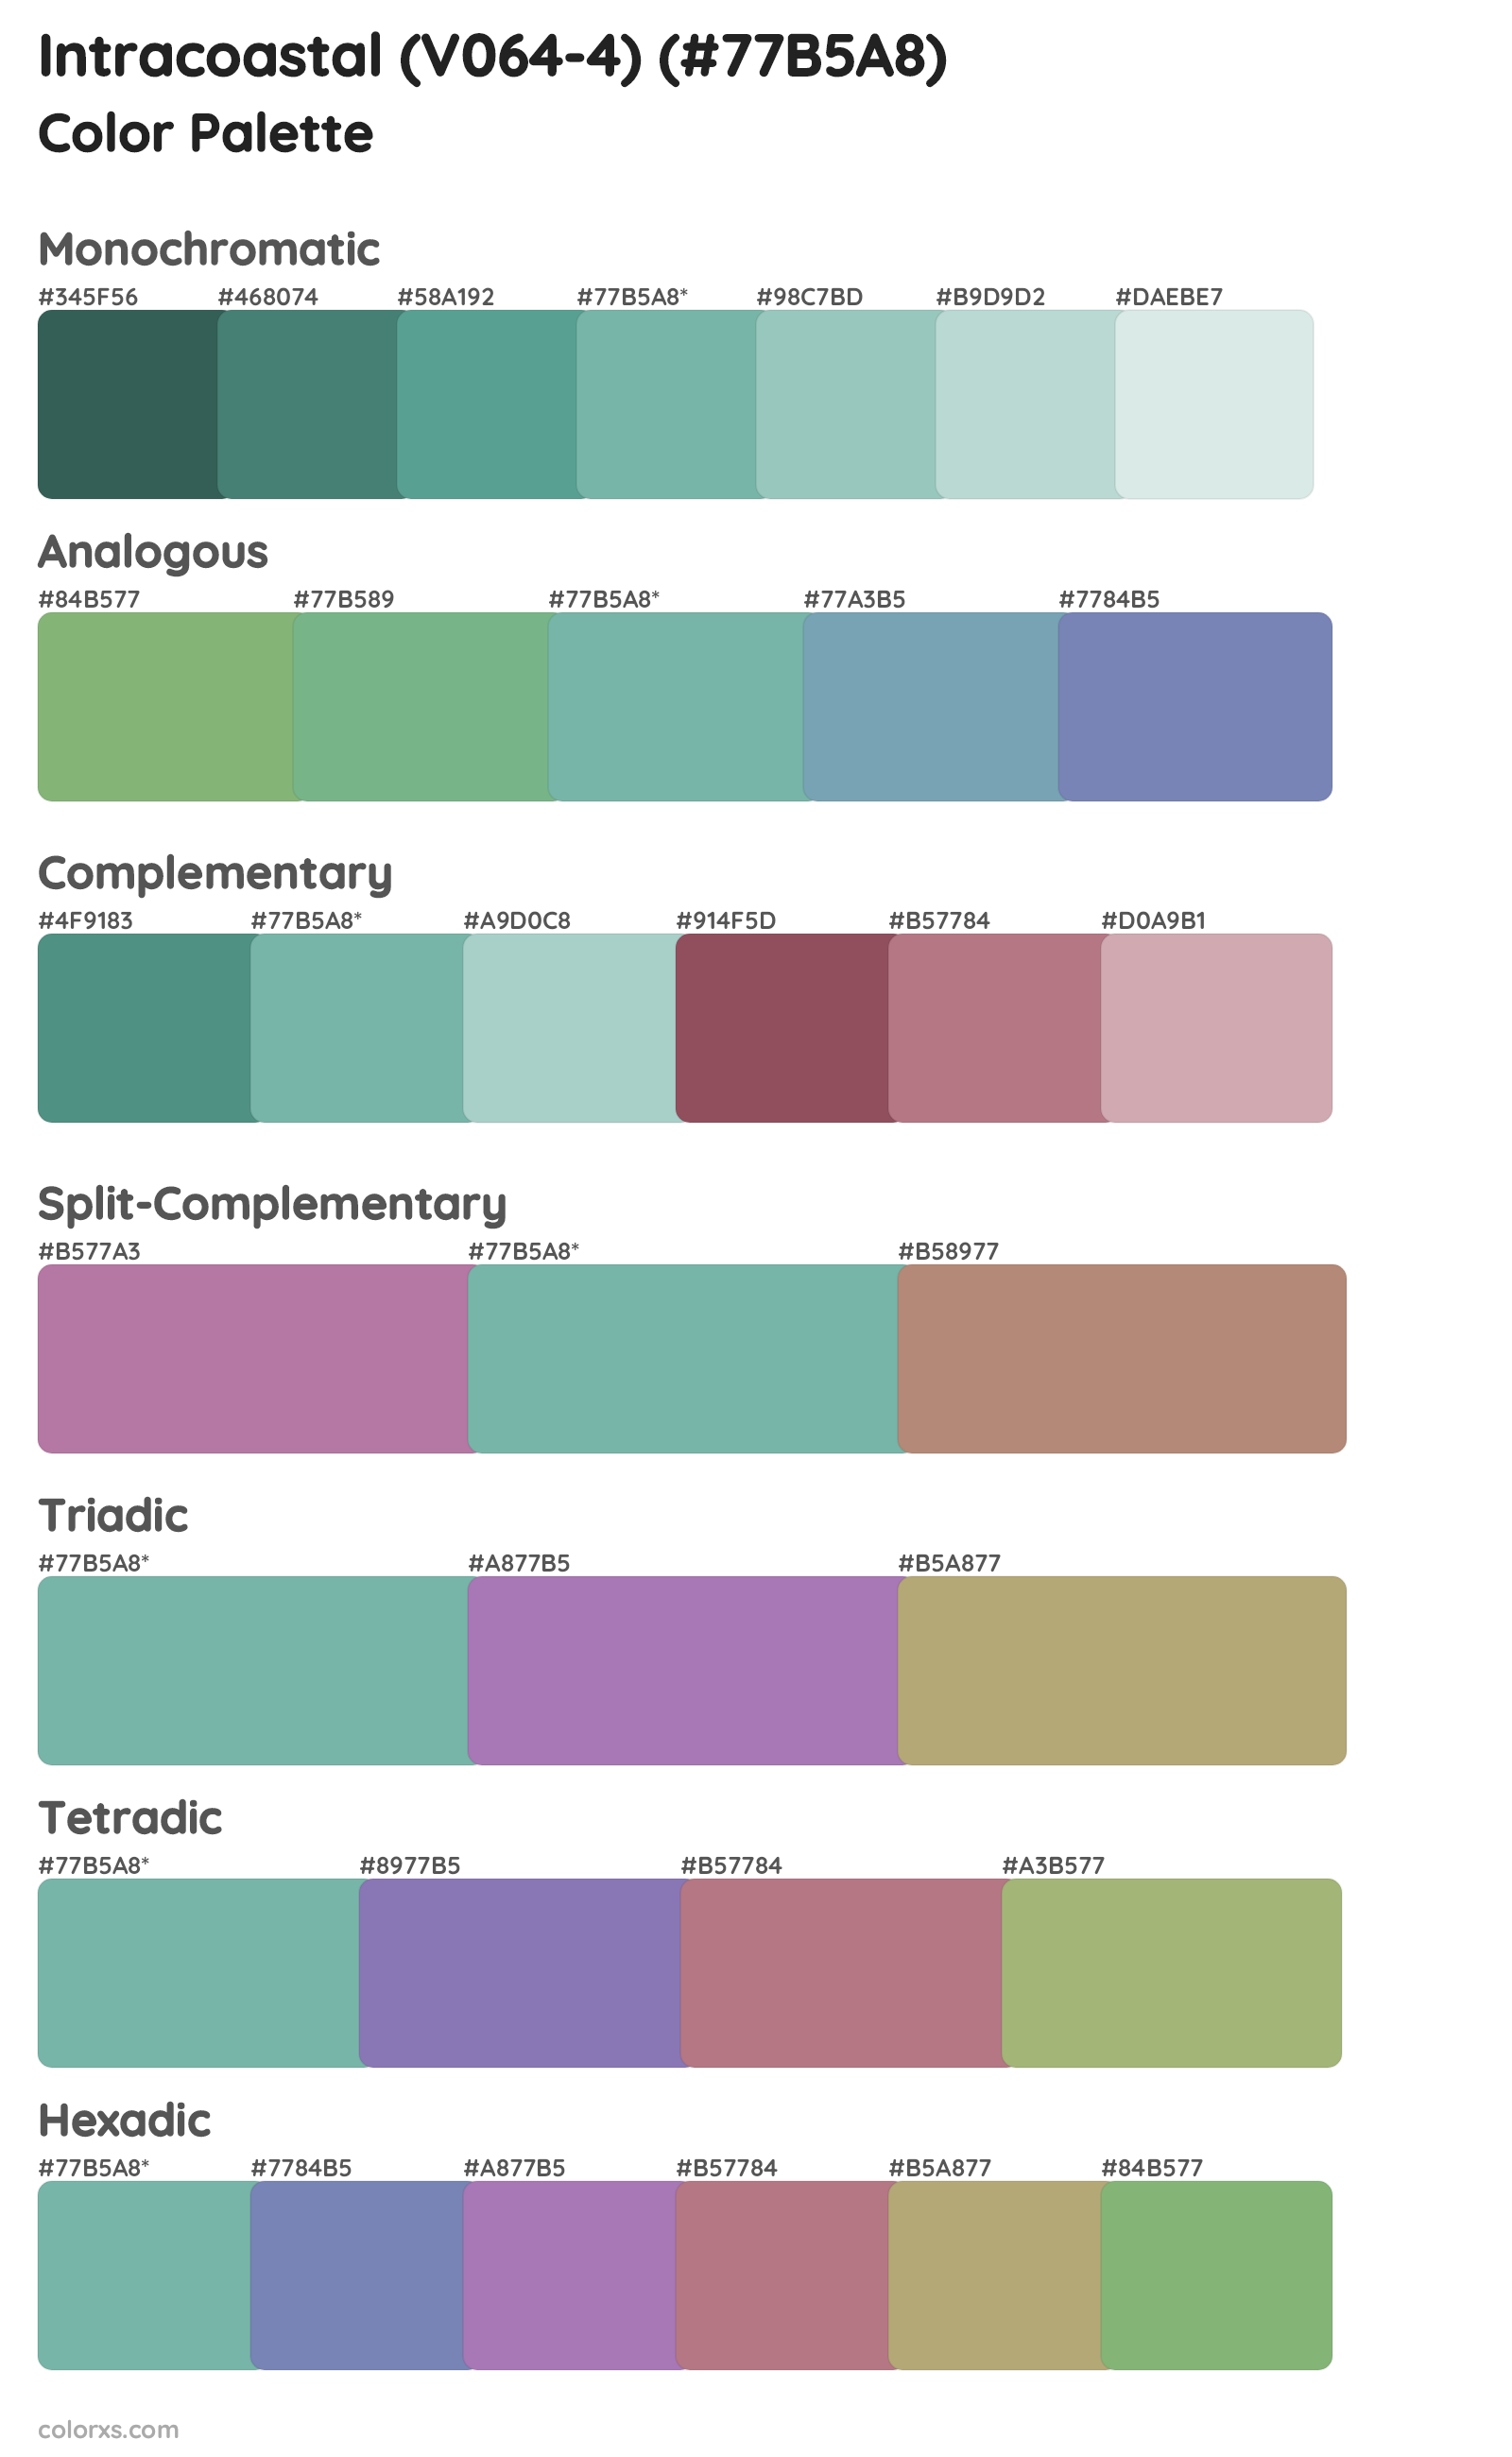 Intracoastal (V064-4) Color Scheme Palettes